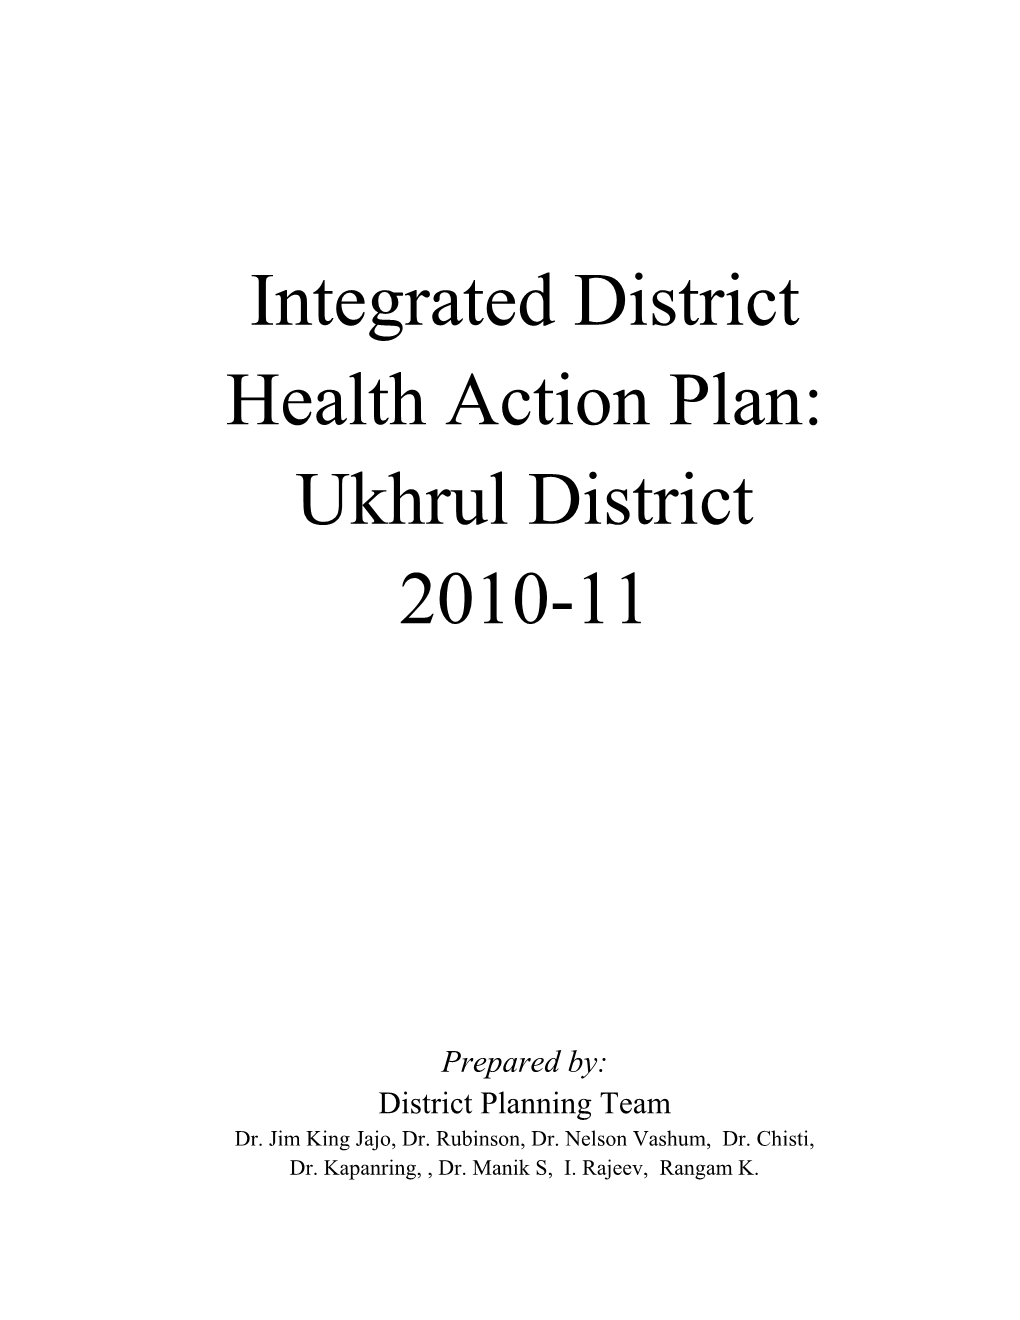 Ukhrul District 2010-11